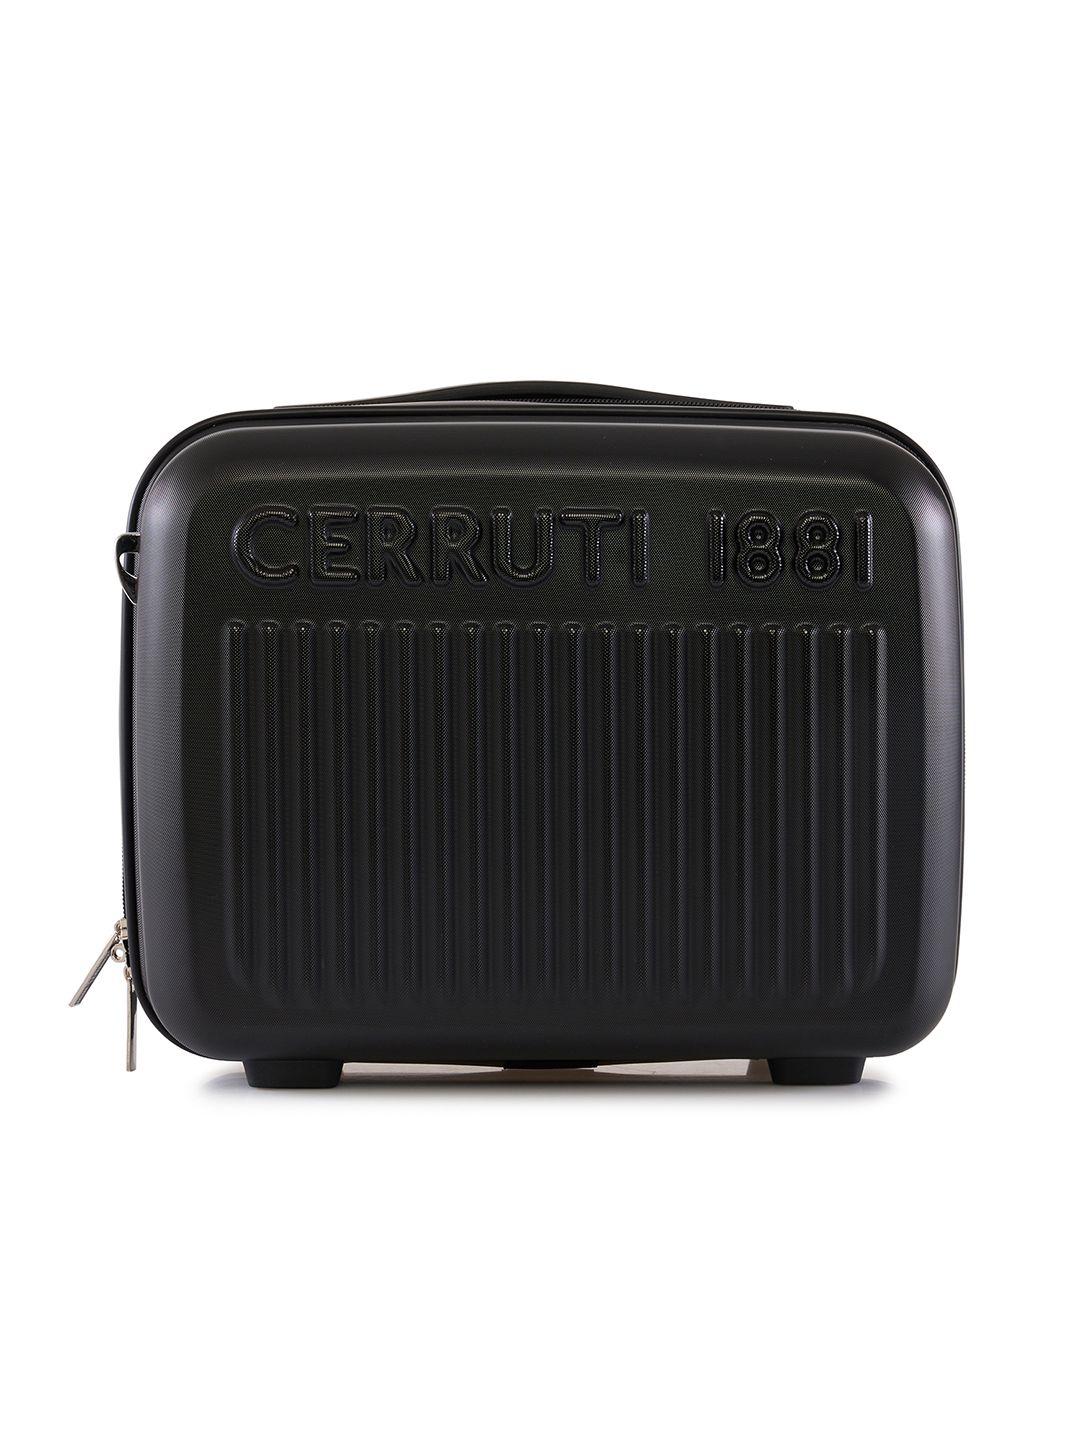 ozuko cerruti 1881 cer06087b textured hard beauty case pouch